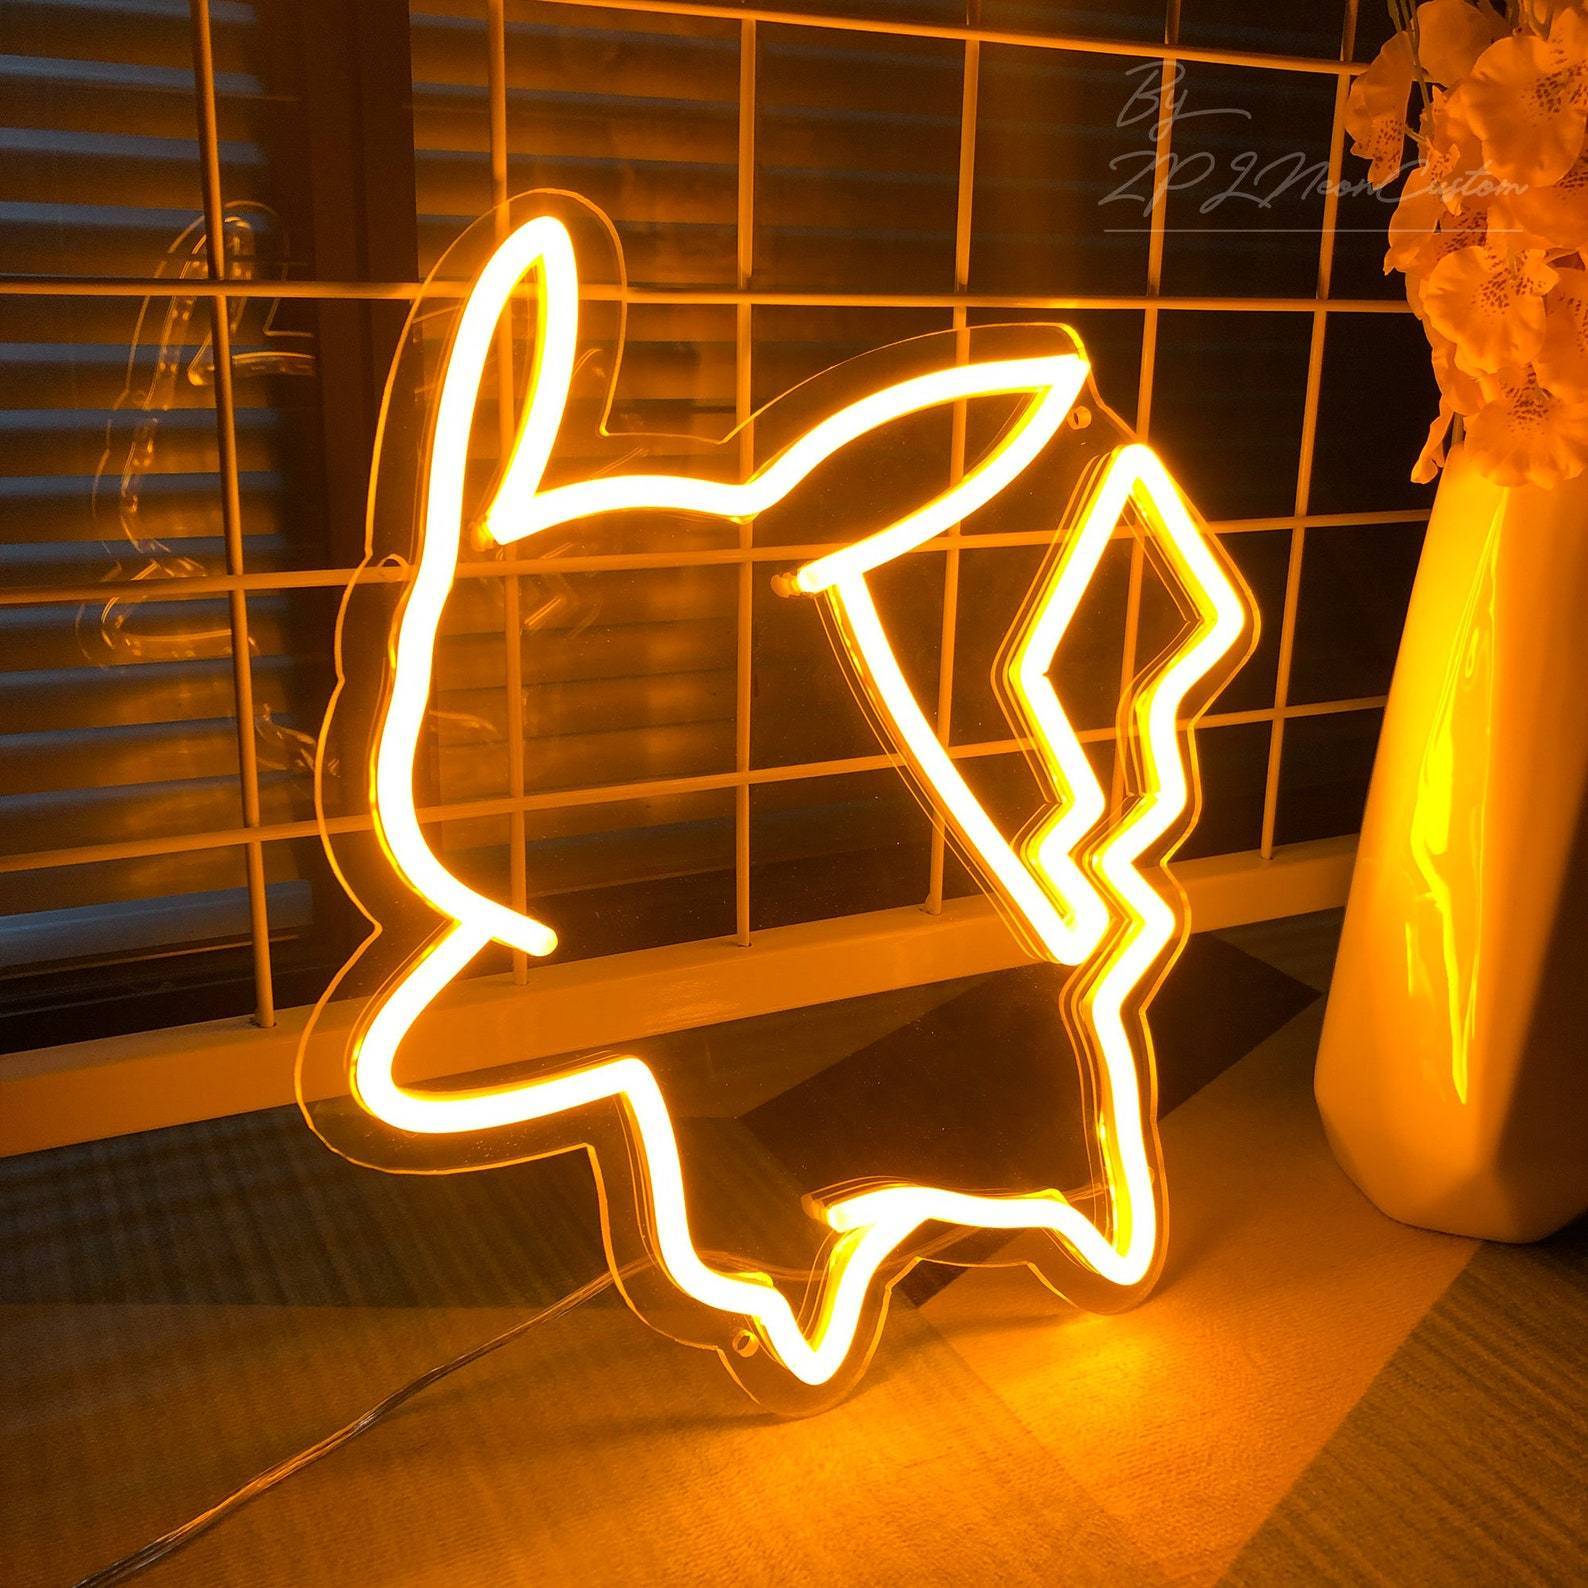 Pikachu Neon Signs